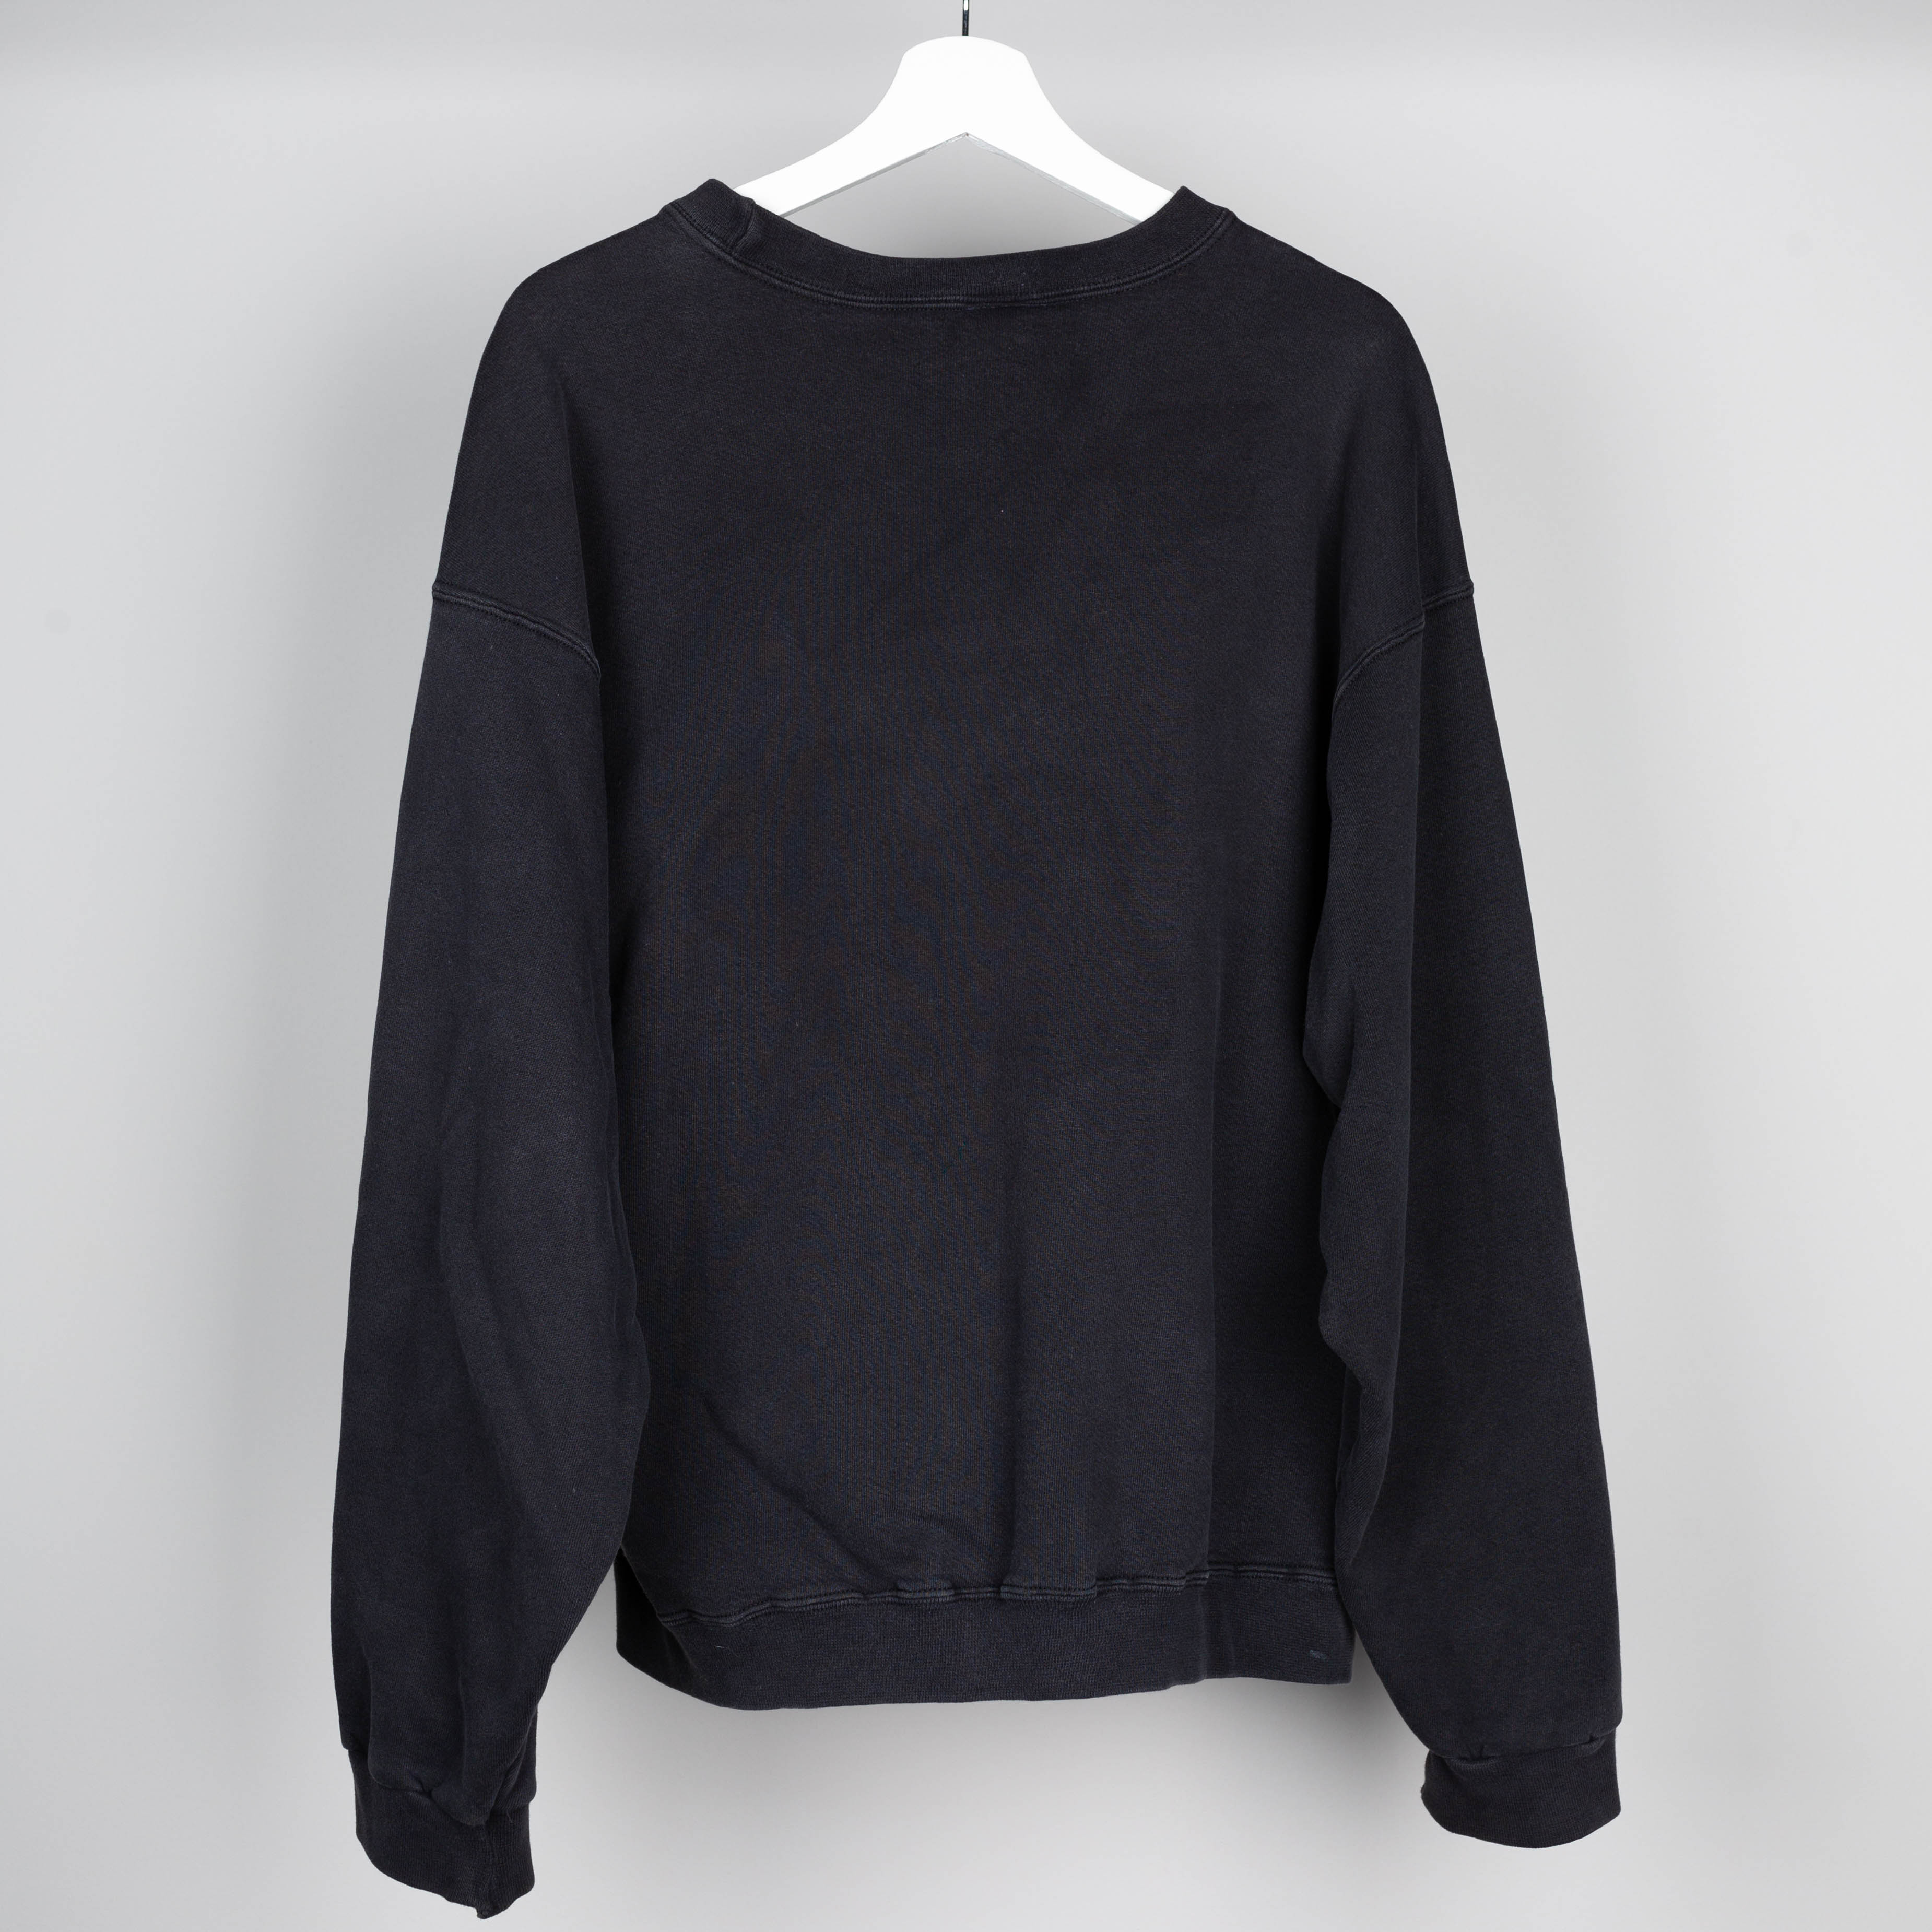 90's Black Nike Crewneck Sweater Size L